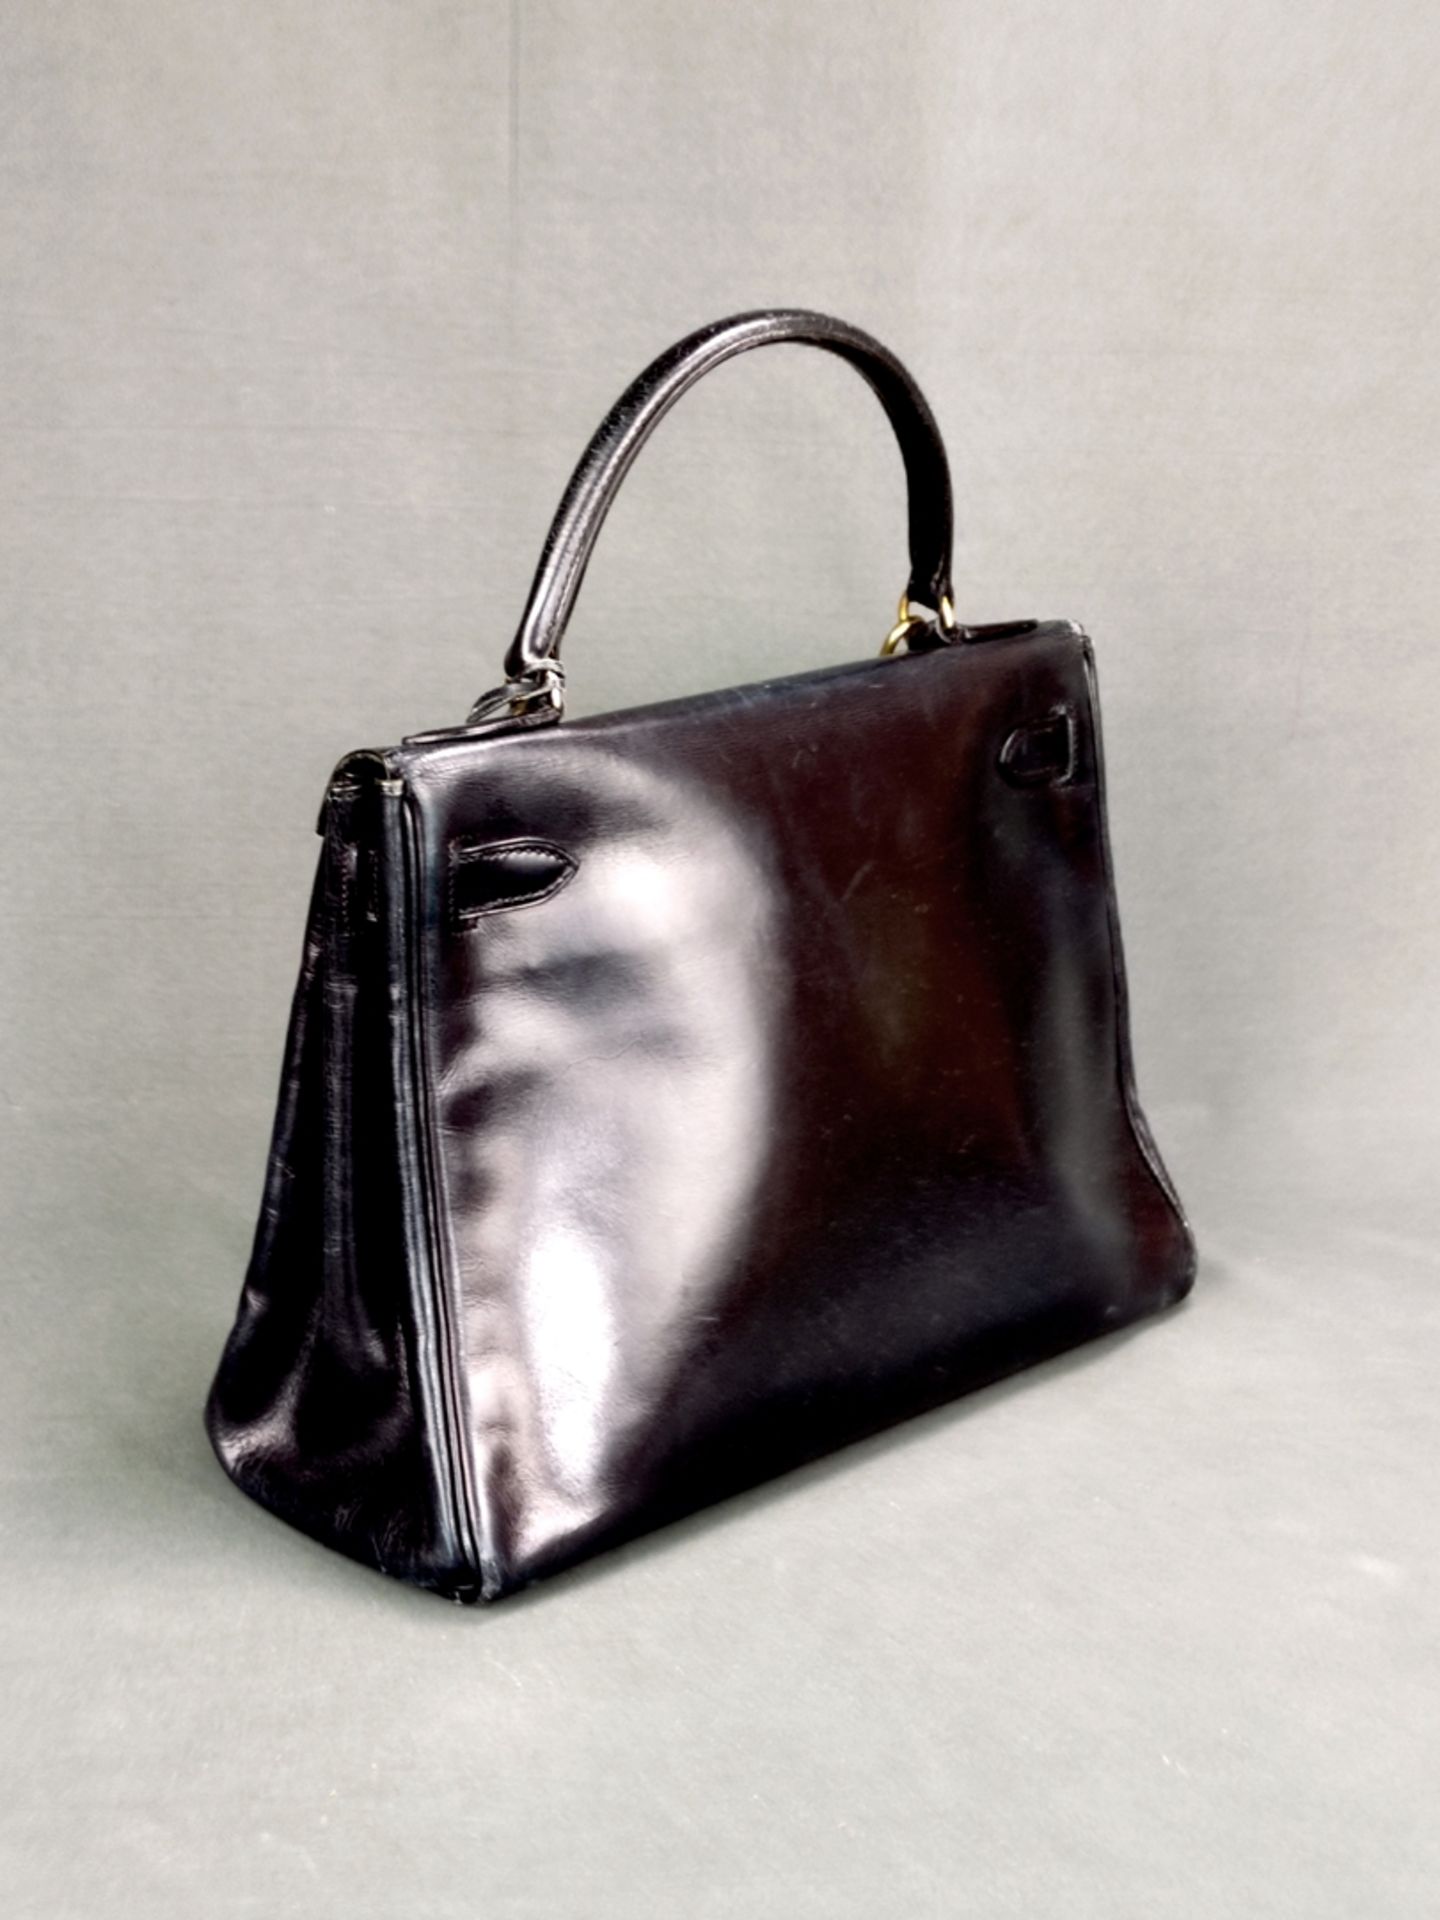 Hermes/ HERMÈS vintage handbag "Kelly Bag 32", 1958, dark blue - Image 3 of 6